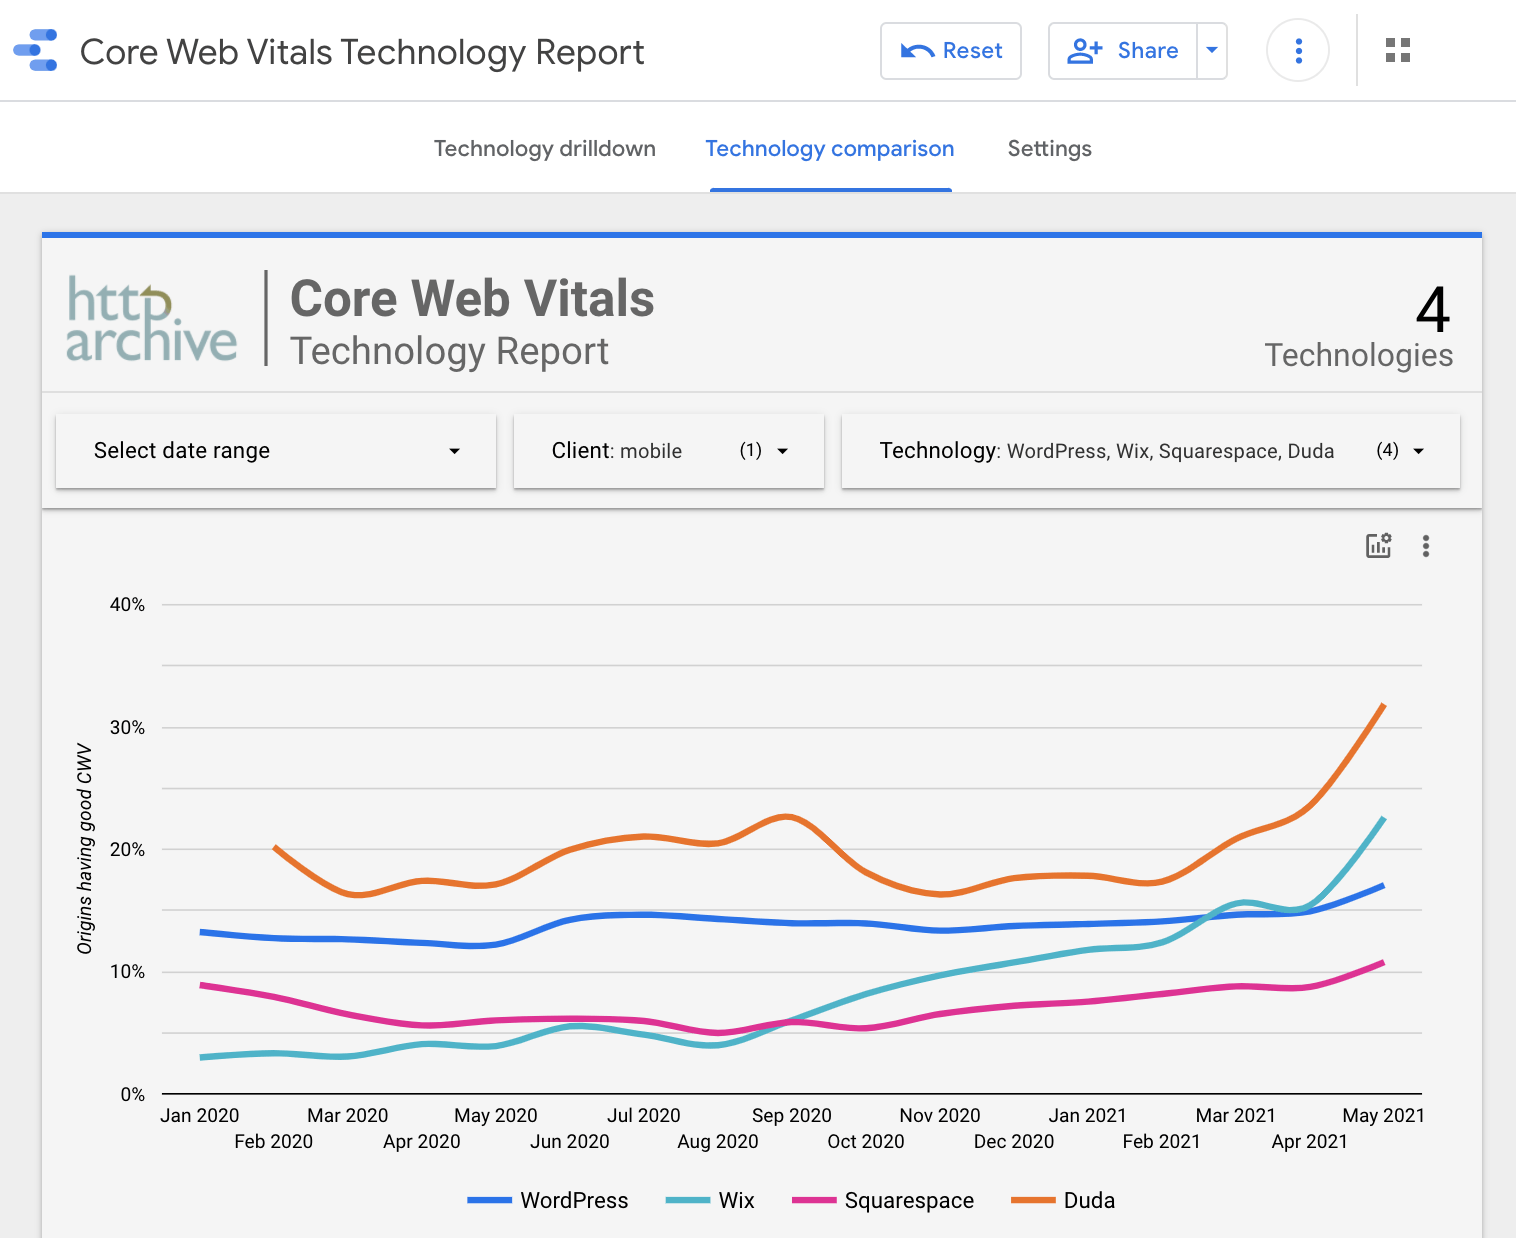 Core Web Vitals Technology Report dashboard comparing WordPress, Duda, Wix, and Squarespace (June 24, 2021)